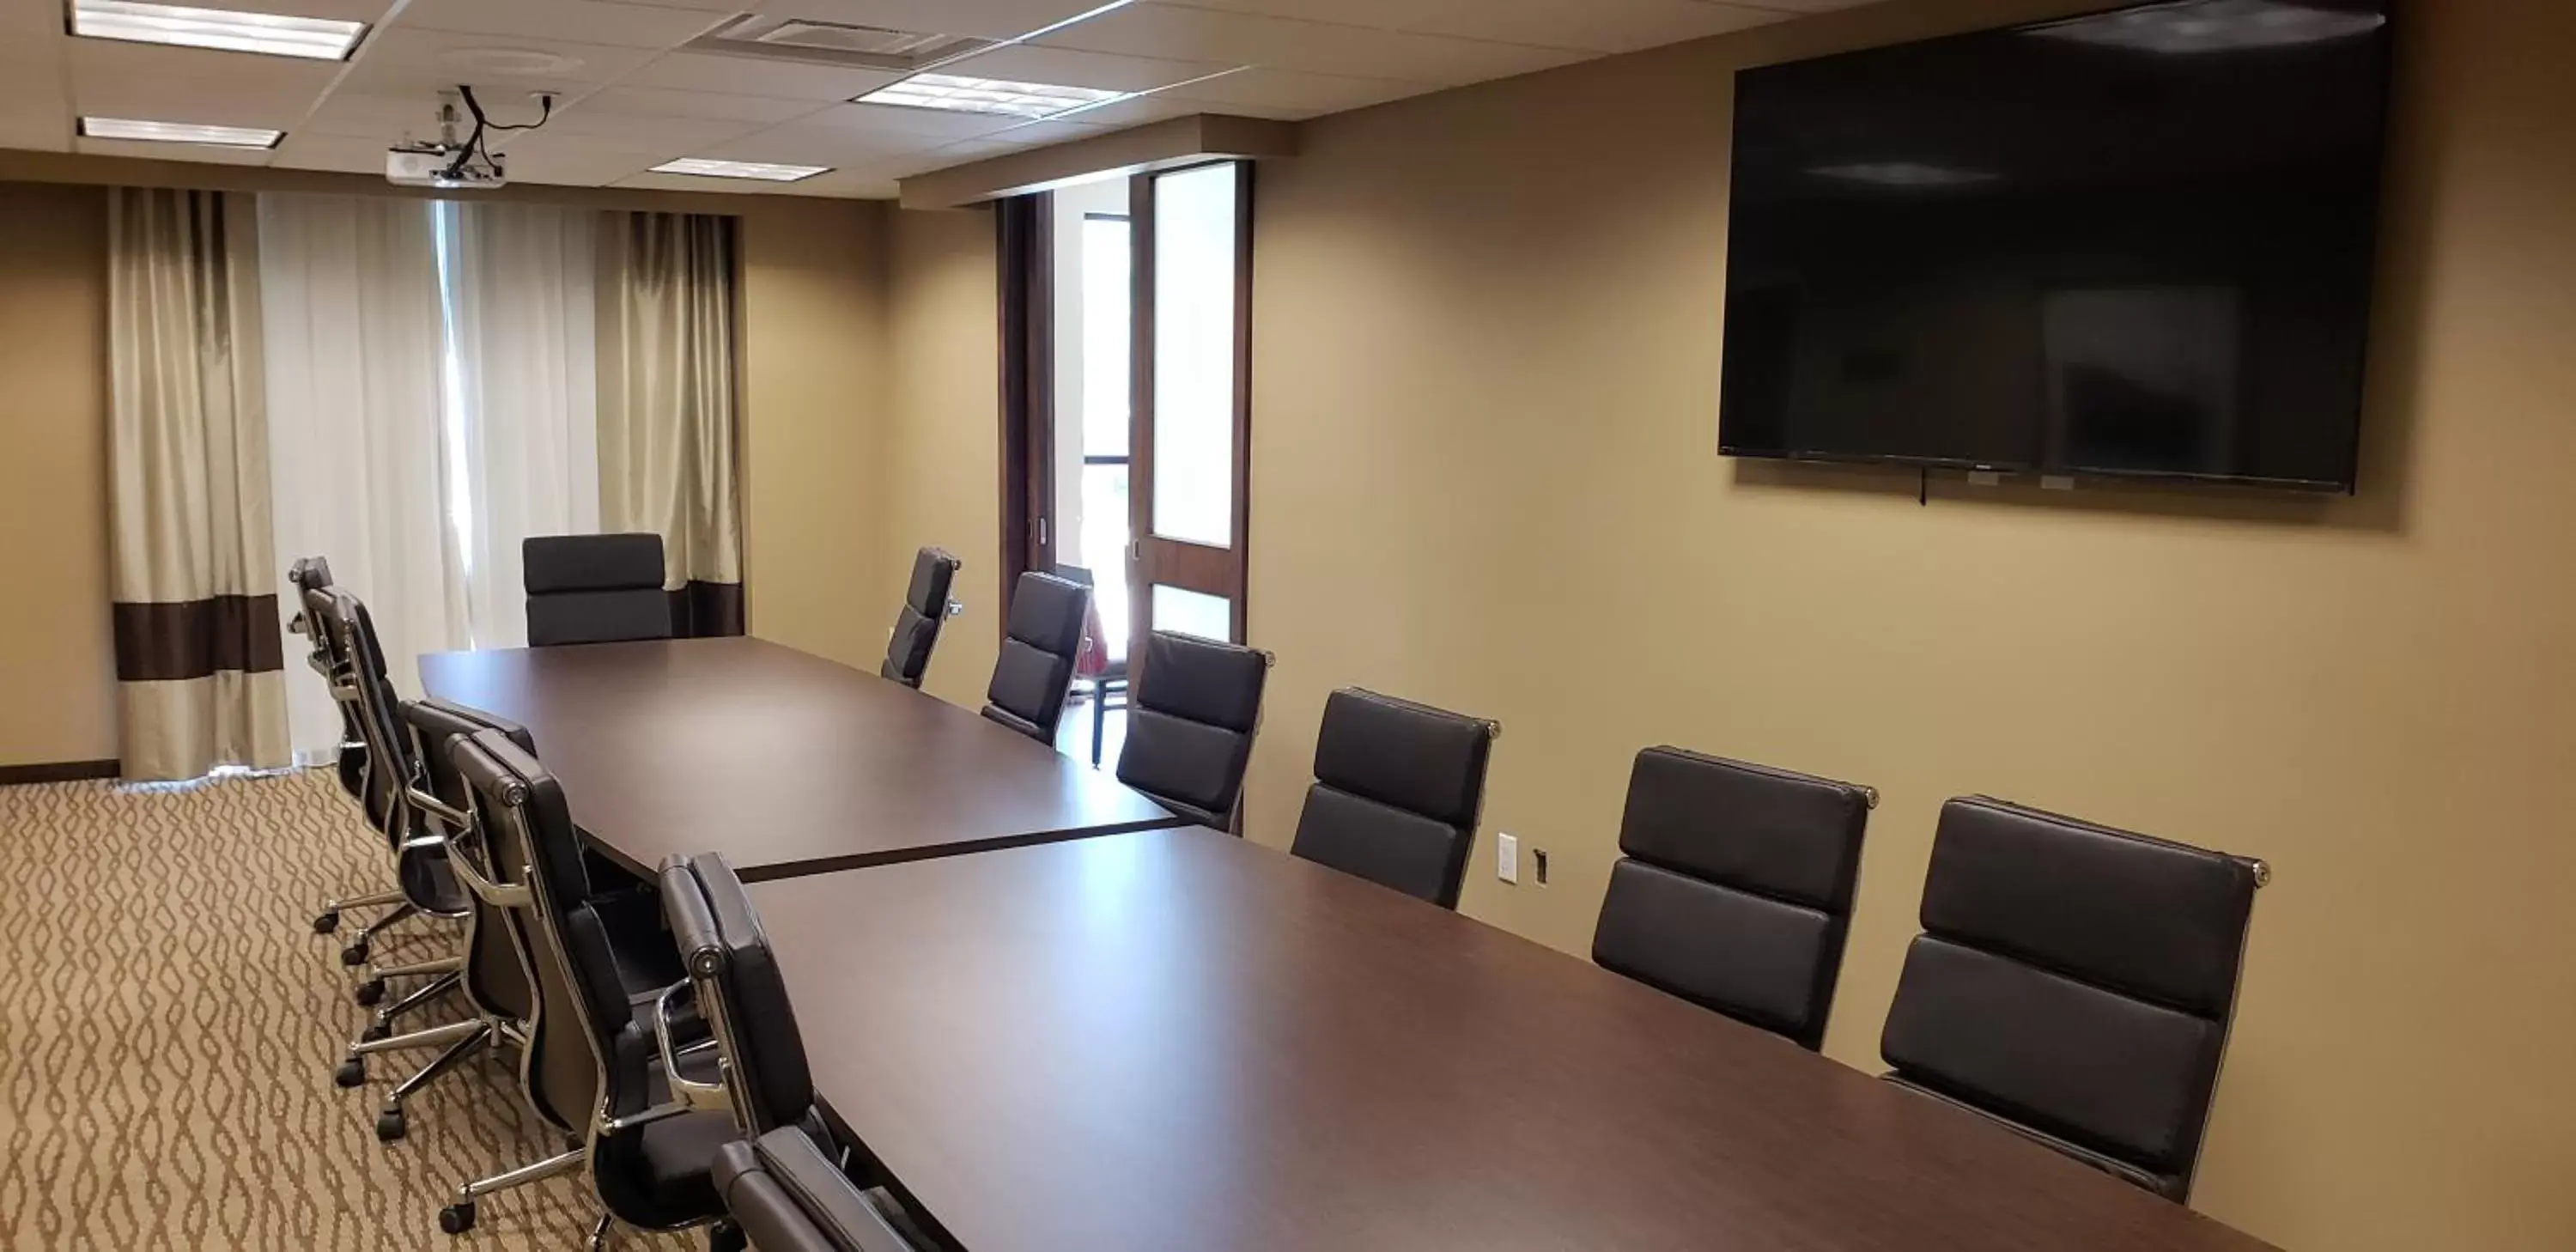 Business facilities in Comfort Suites Denver near Anschutz Medical Campus